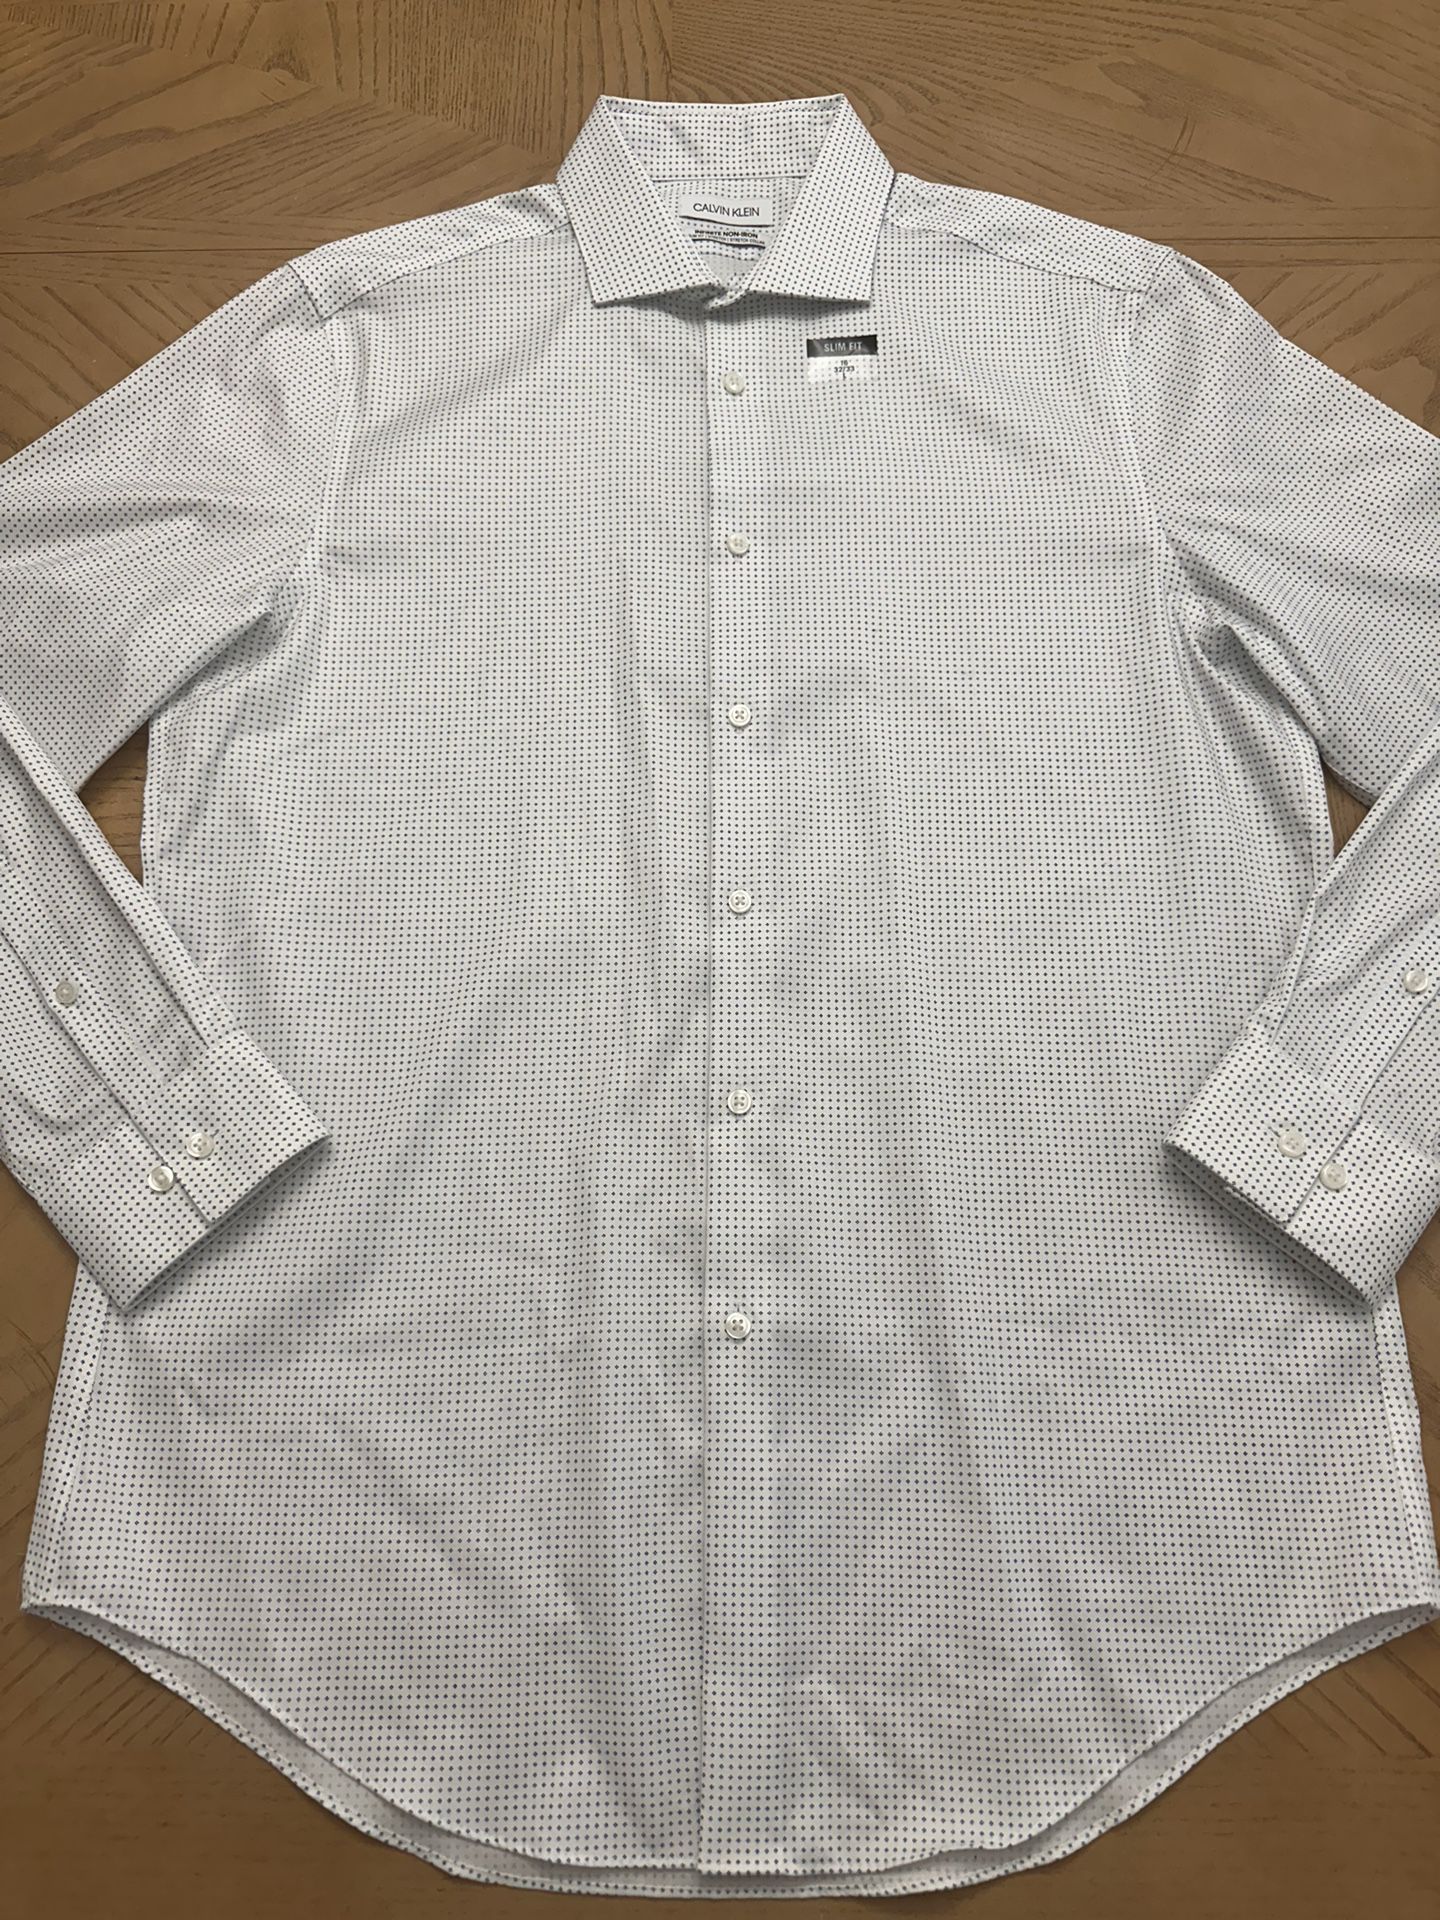 Calvin Klein Infinite Non-Iron Slim Fit Stretch White/Blue  Dress Shirt  Size Large 16 32/33